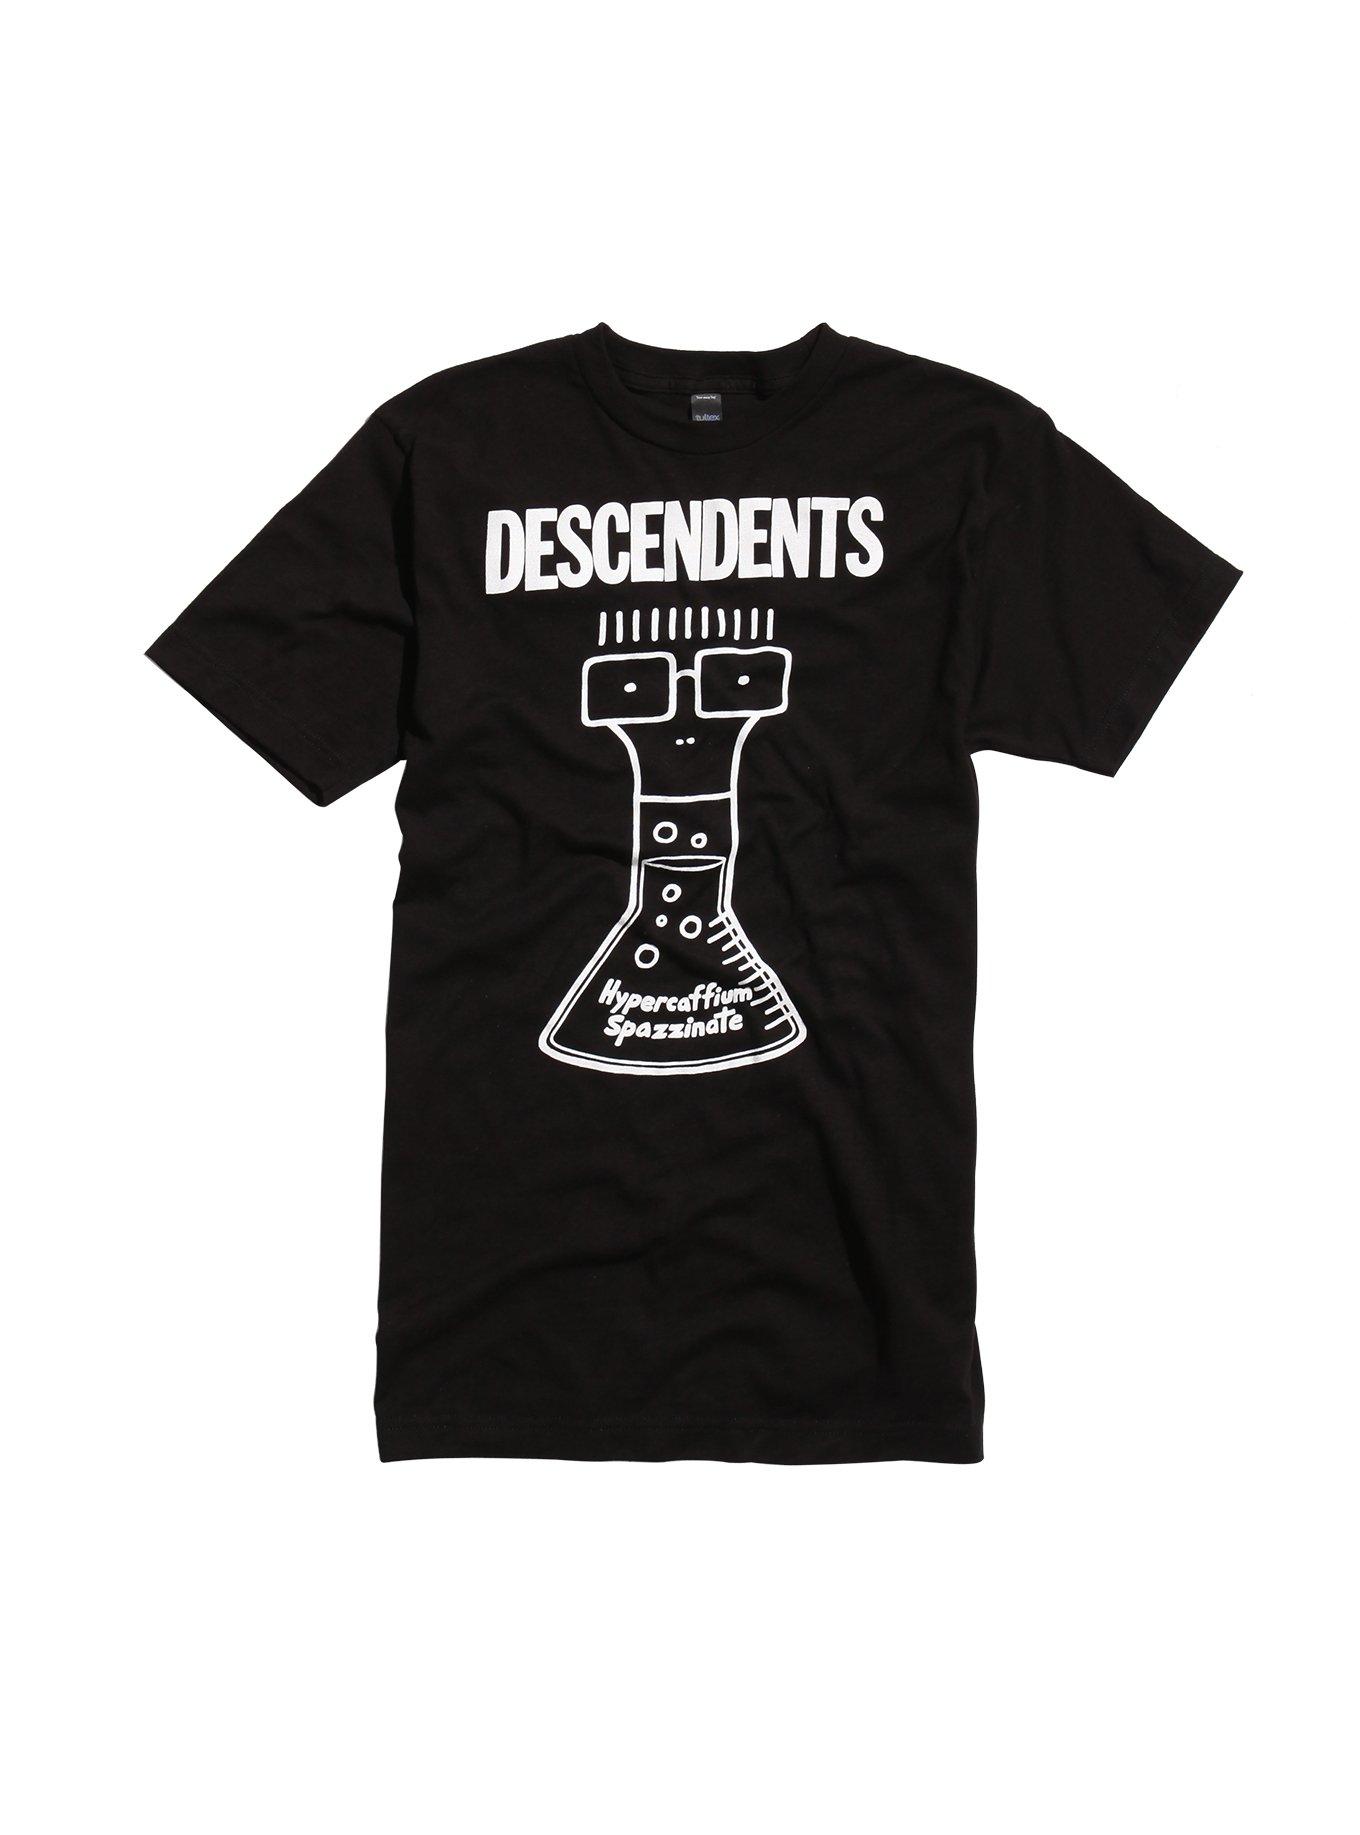 Descendants Hypercaffium Spazzinate T-Shirt, BLACK, hi-res